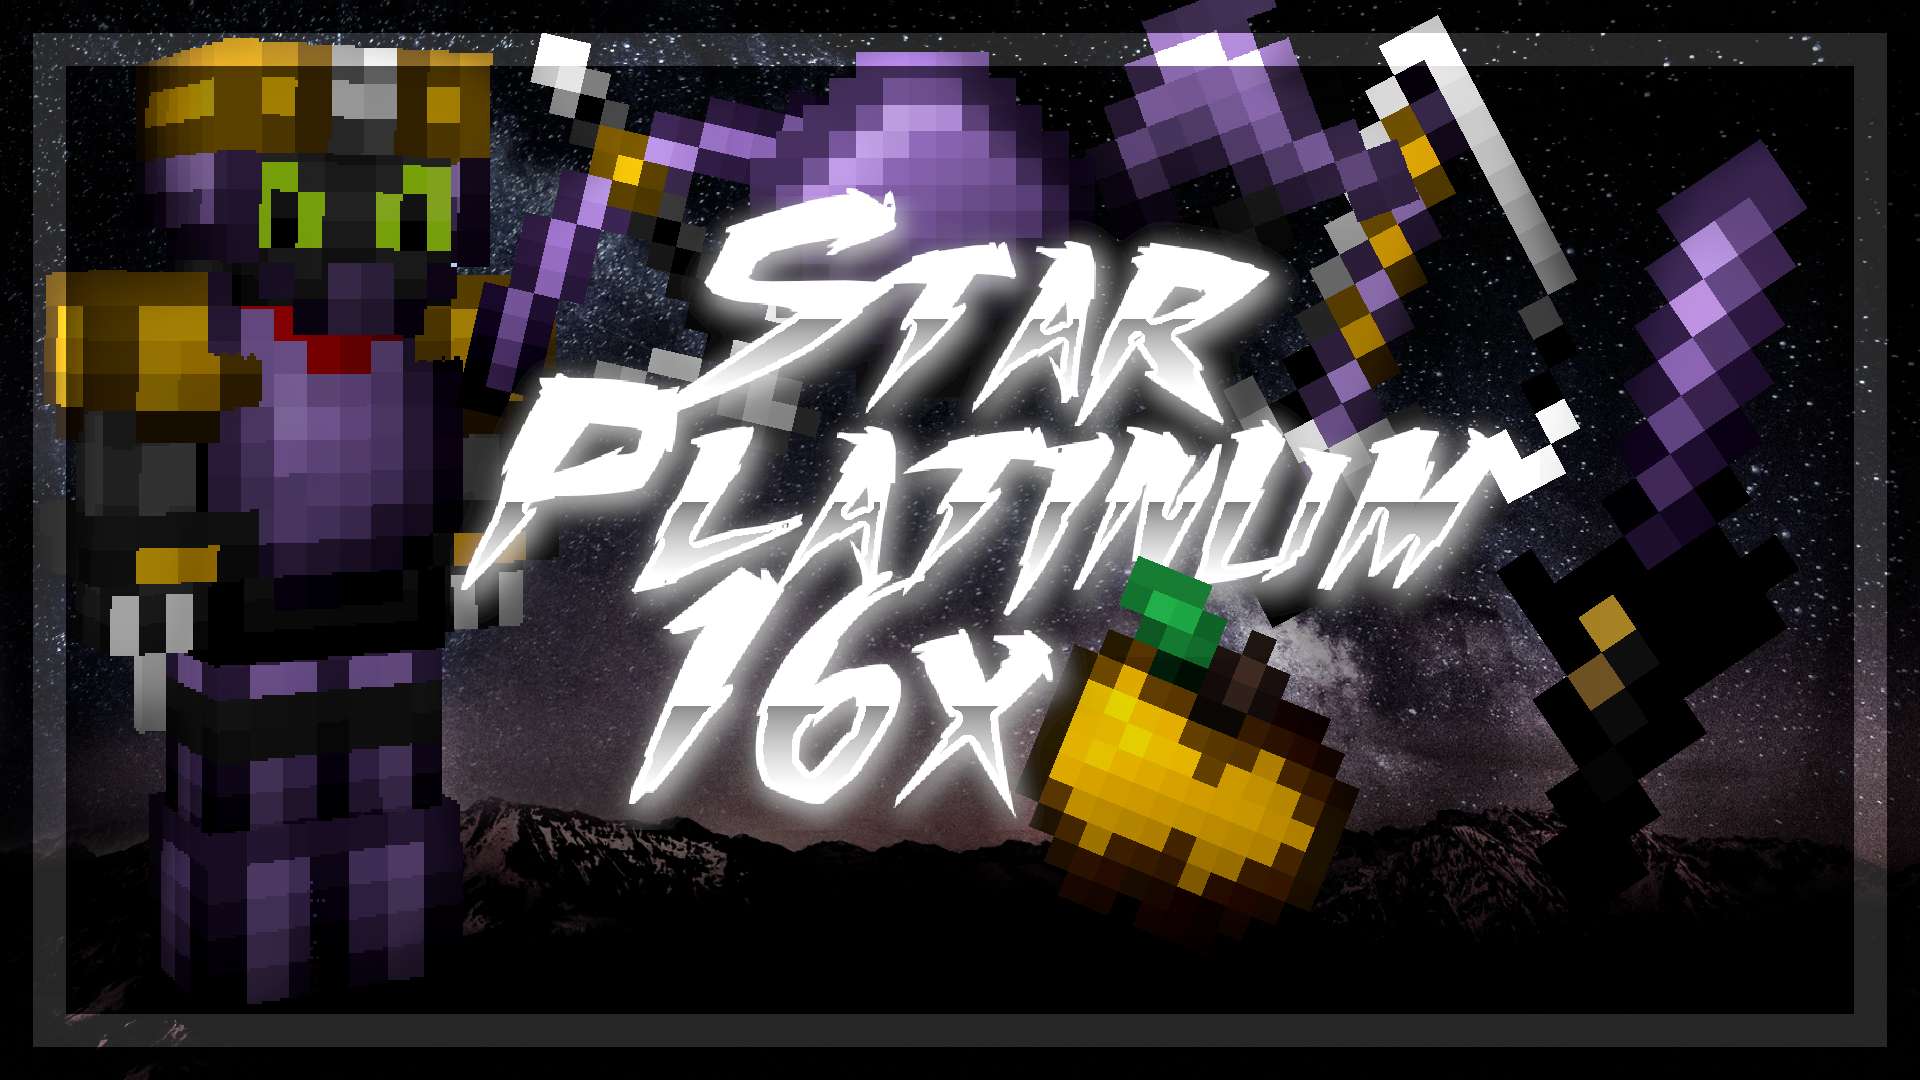 Star Platinum 16x by MattePacks on PvPRP